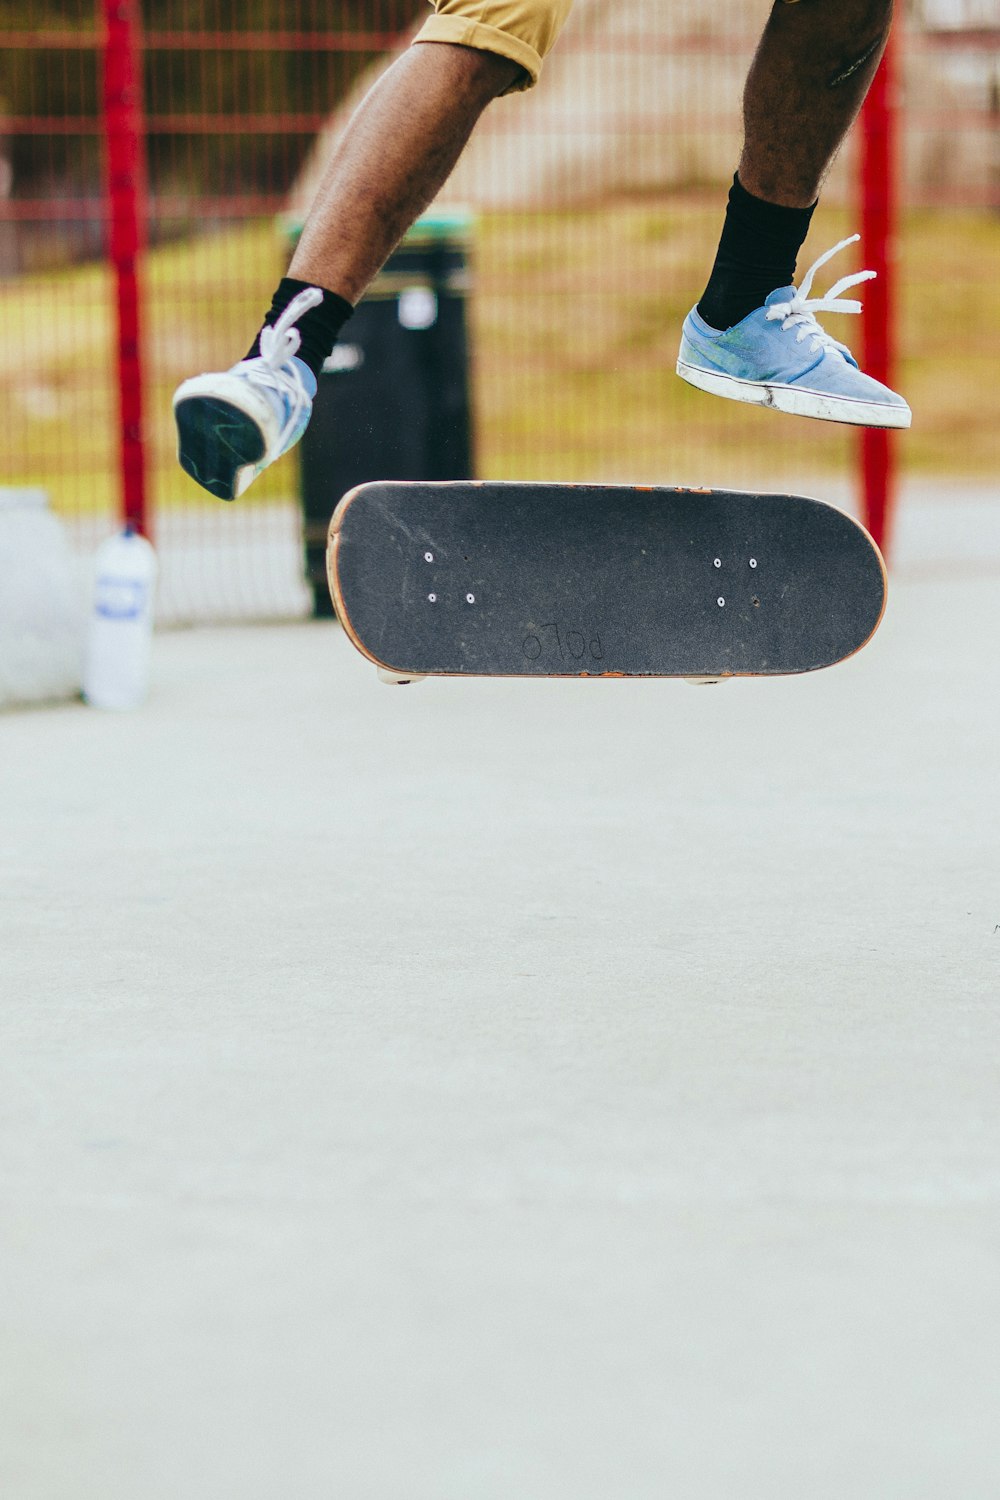 Uomo che gioca a skateboard mentre esegue flip trick